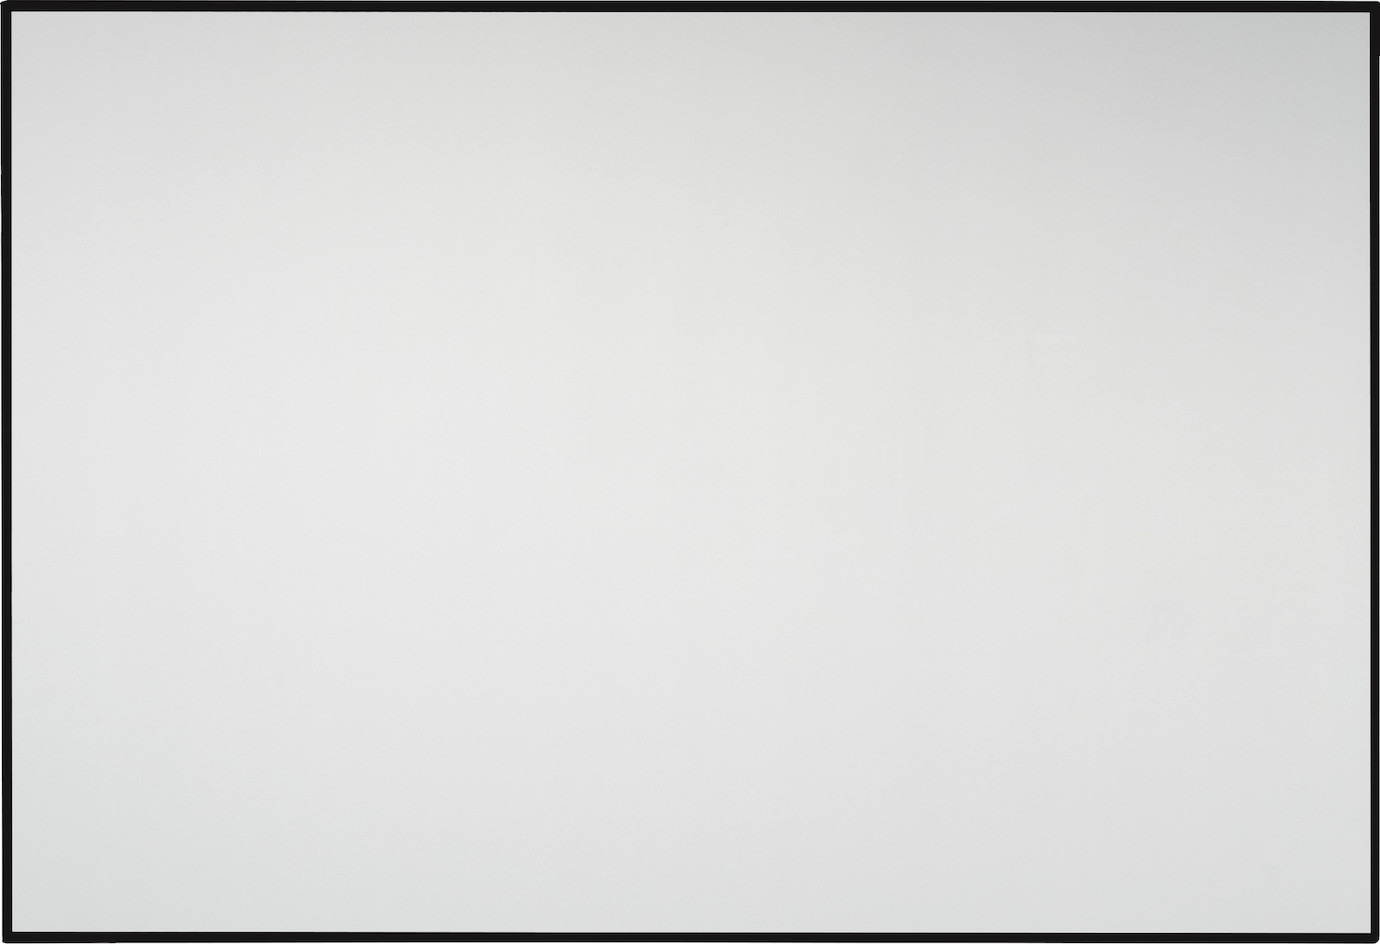 celexon HomeCinema Frame 244 x 137 cm, 110" - Dynamic Slate ALR